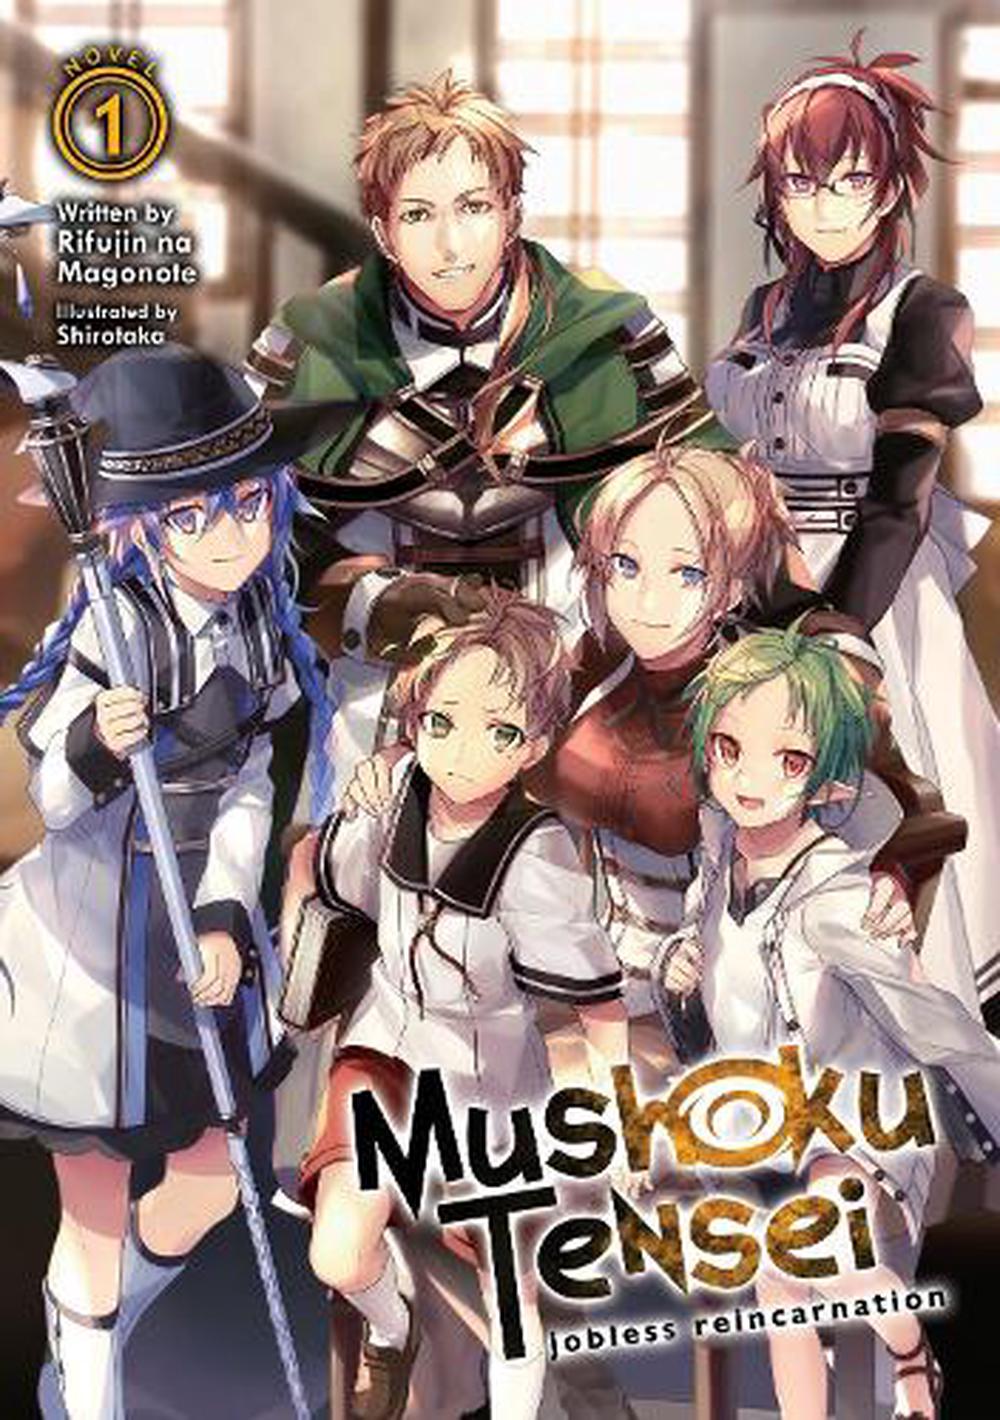 Mushoku Tensei Jobless Reincarnation Light Novel Vol 1 By Rifujin